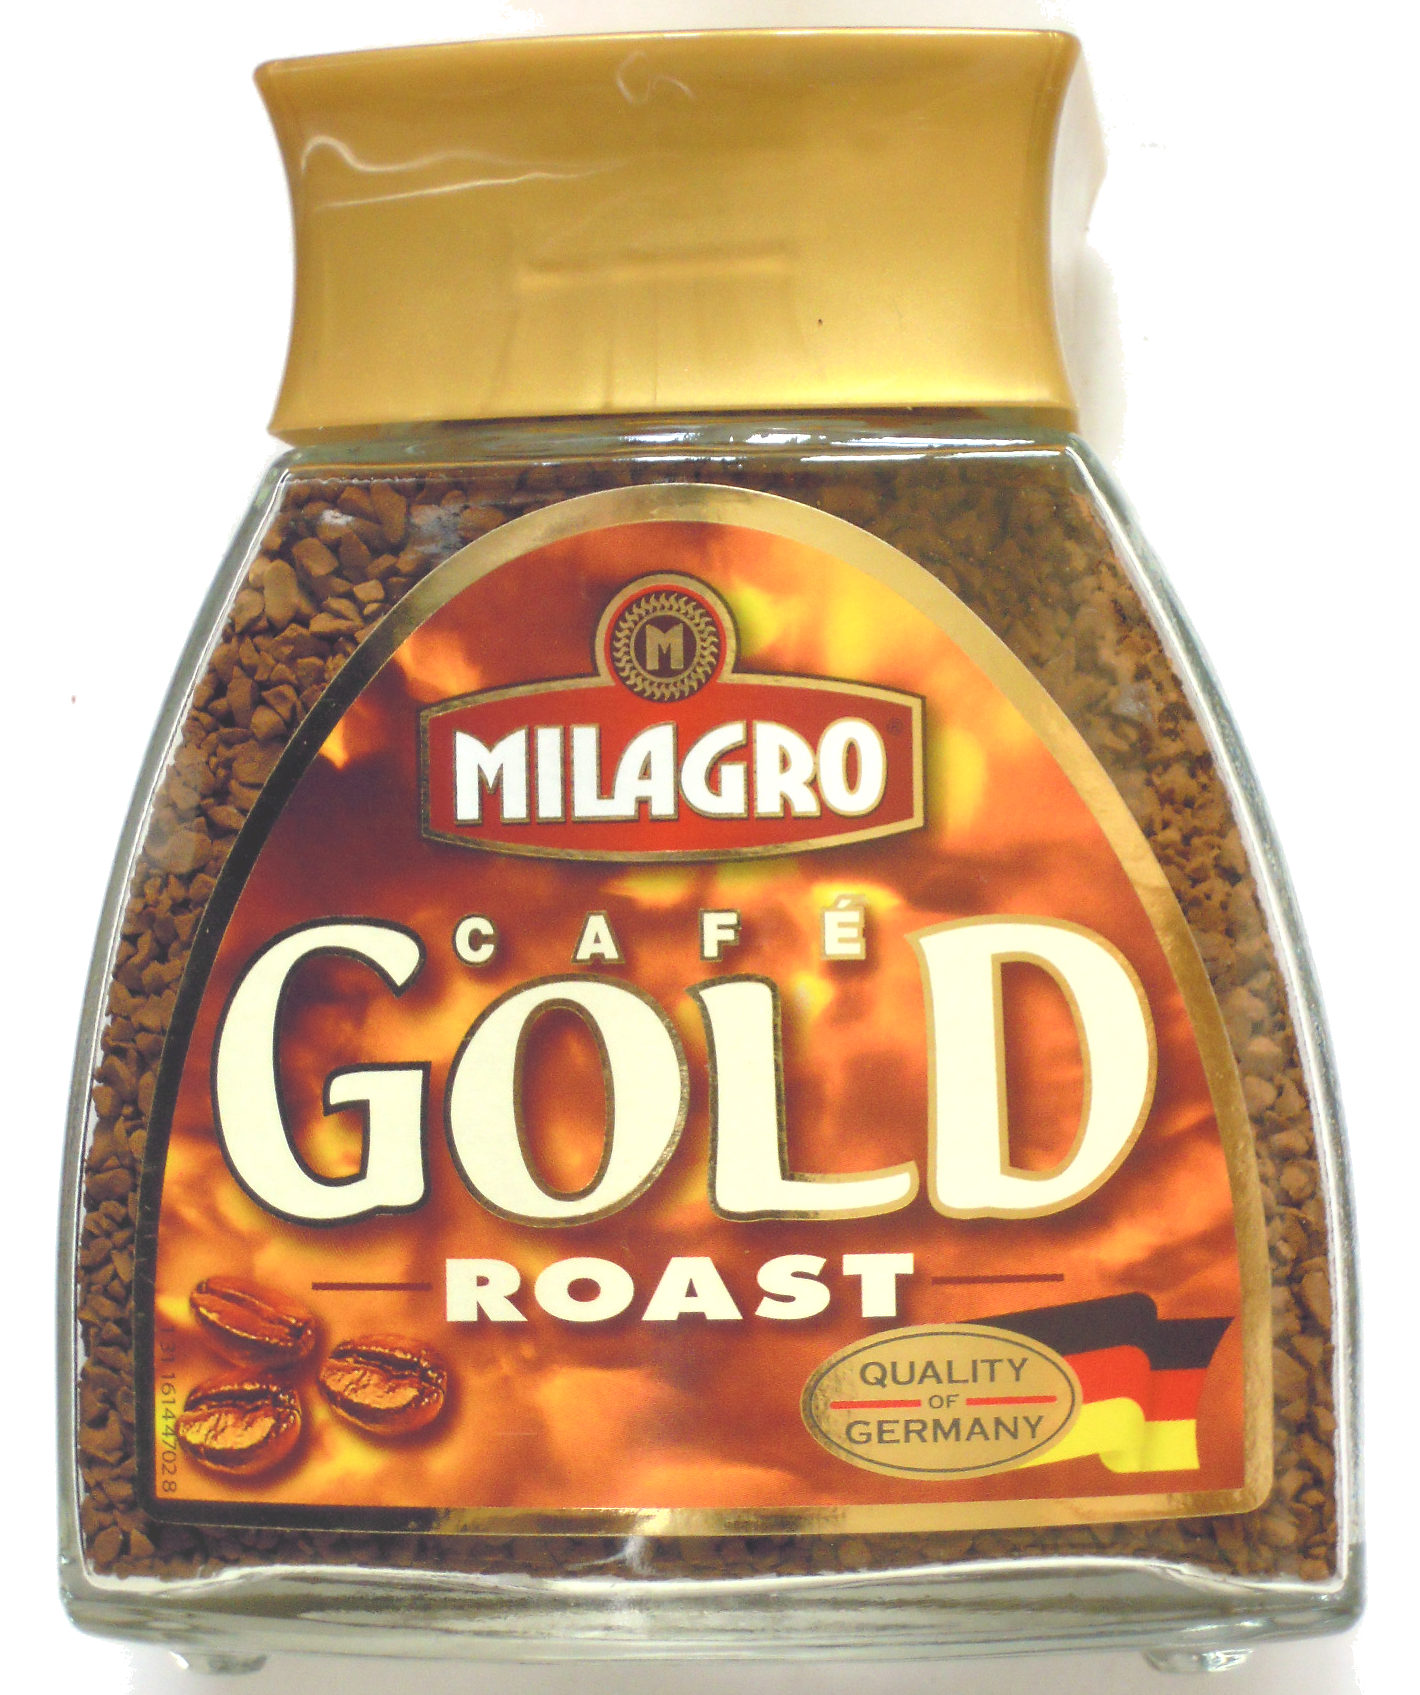 Gold roast - Product - ru